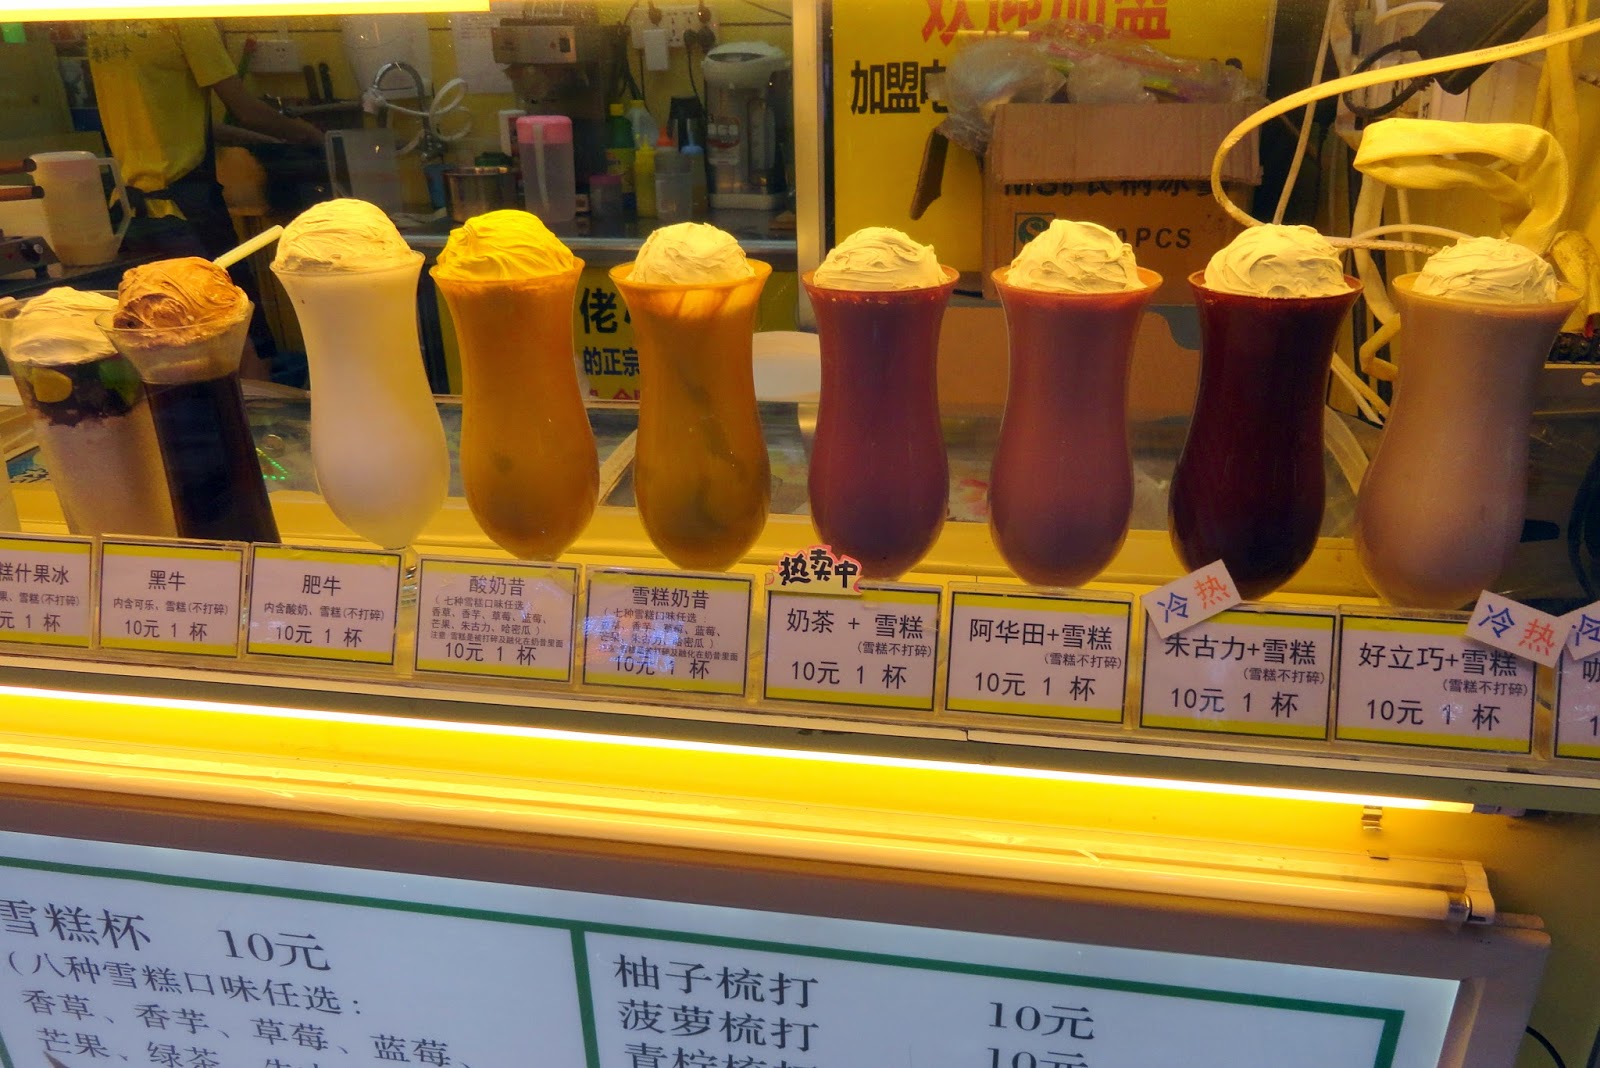 Plastic Food Display in China